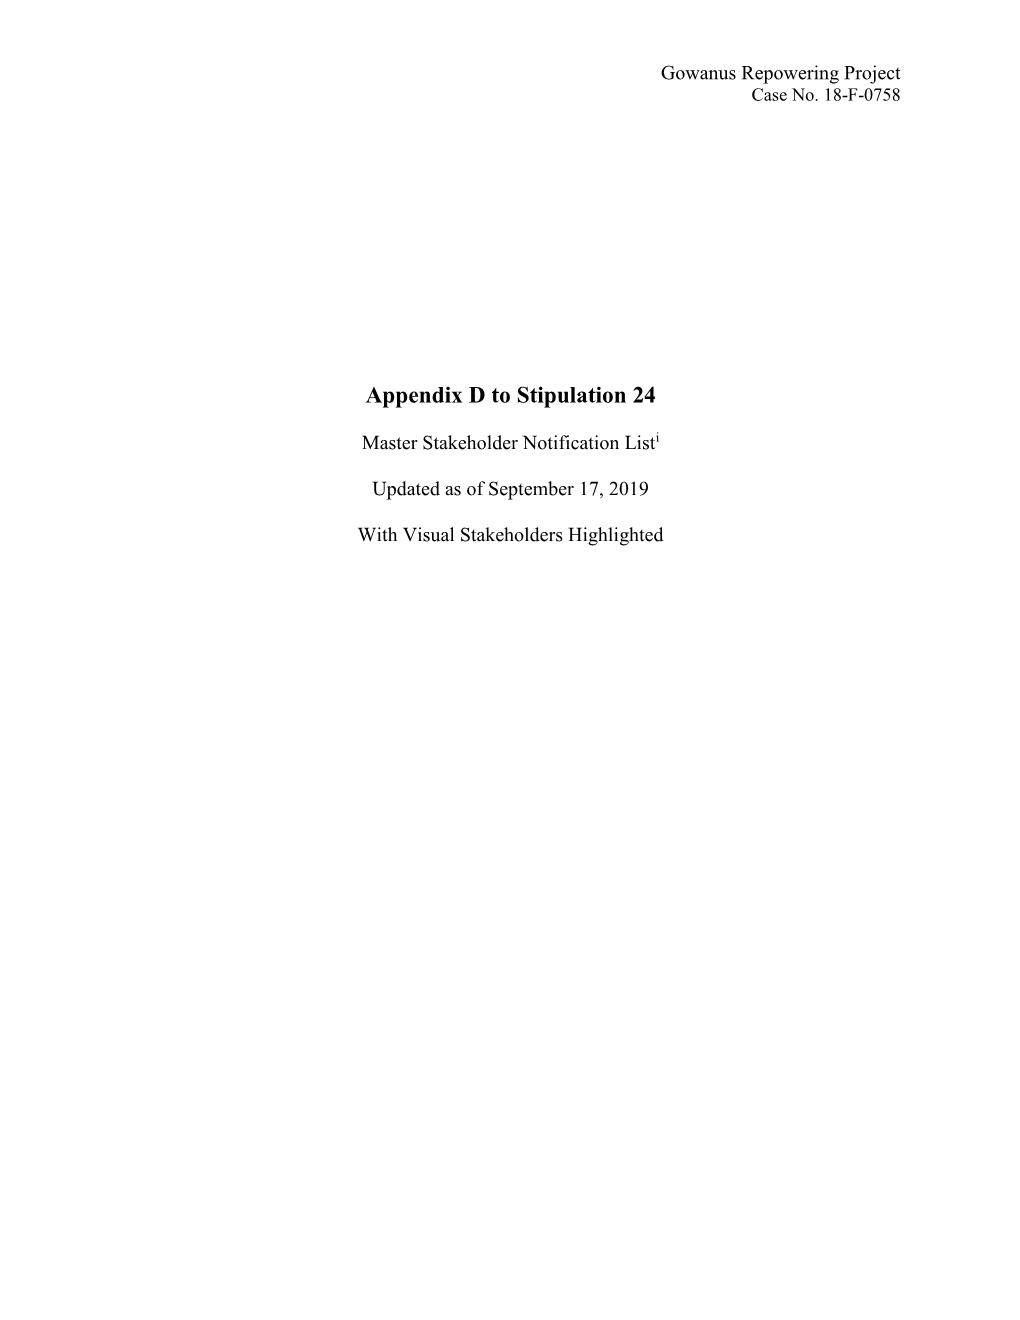 Appendix D to Stipulation 24